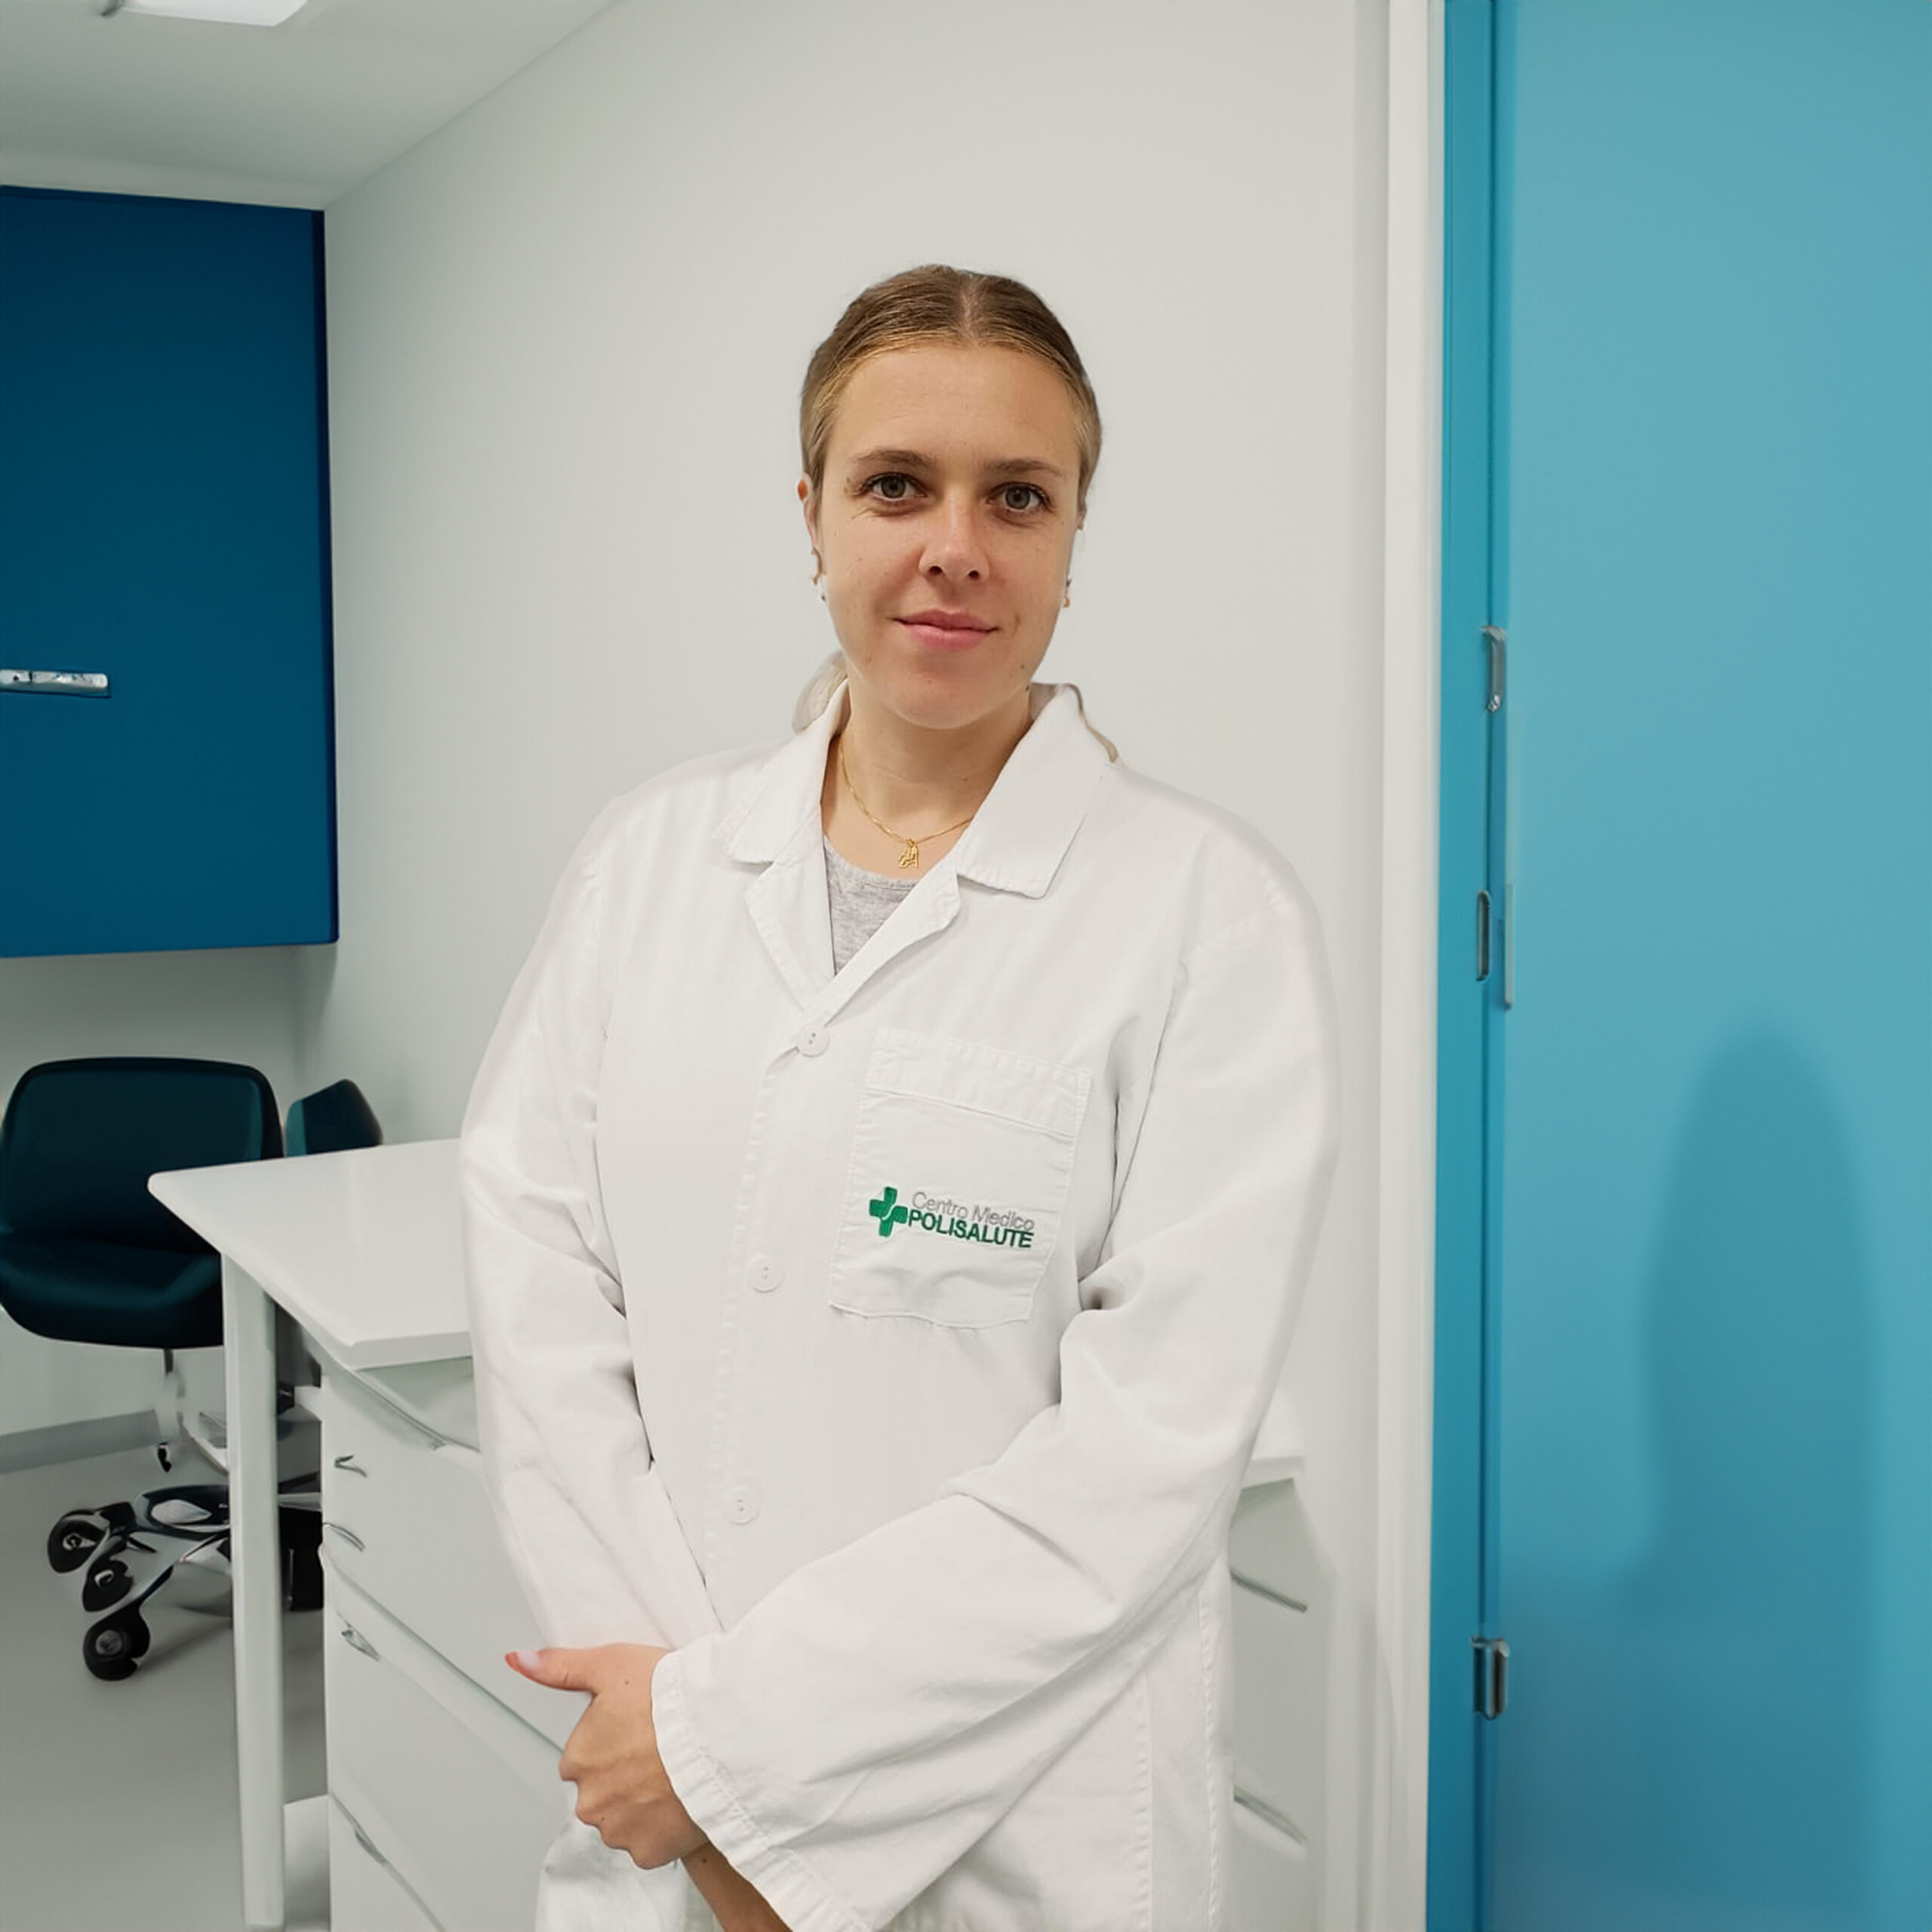 Dottoressa Samantha Palagi Biologo Nutrizionista Cytotest e Nutrigenetica - Centro Medico Polisalute Cologno Monzese (Milano)